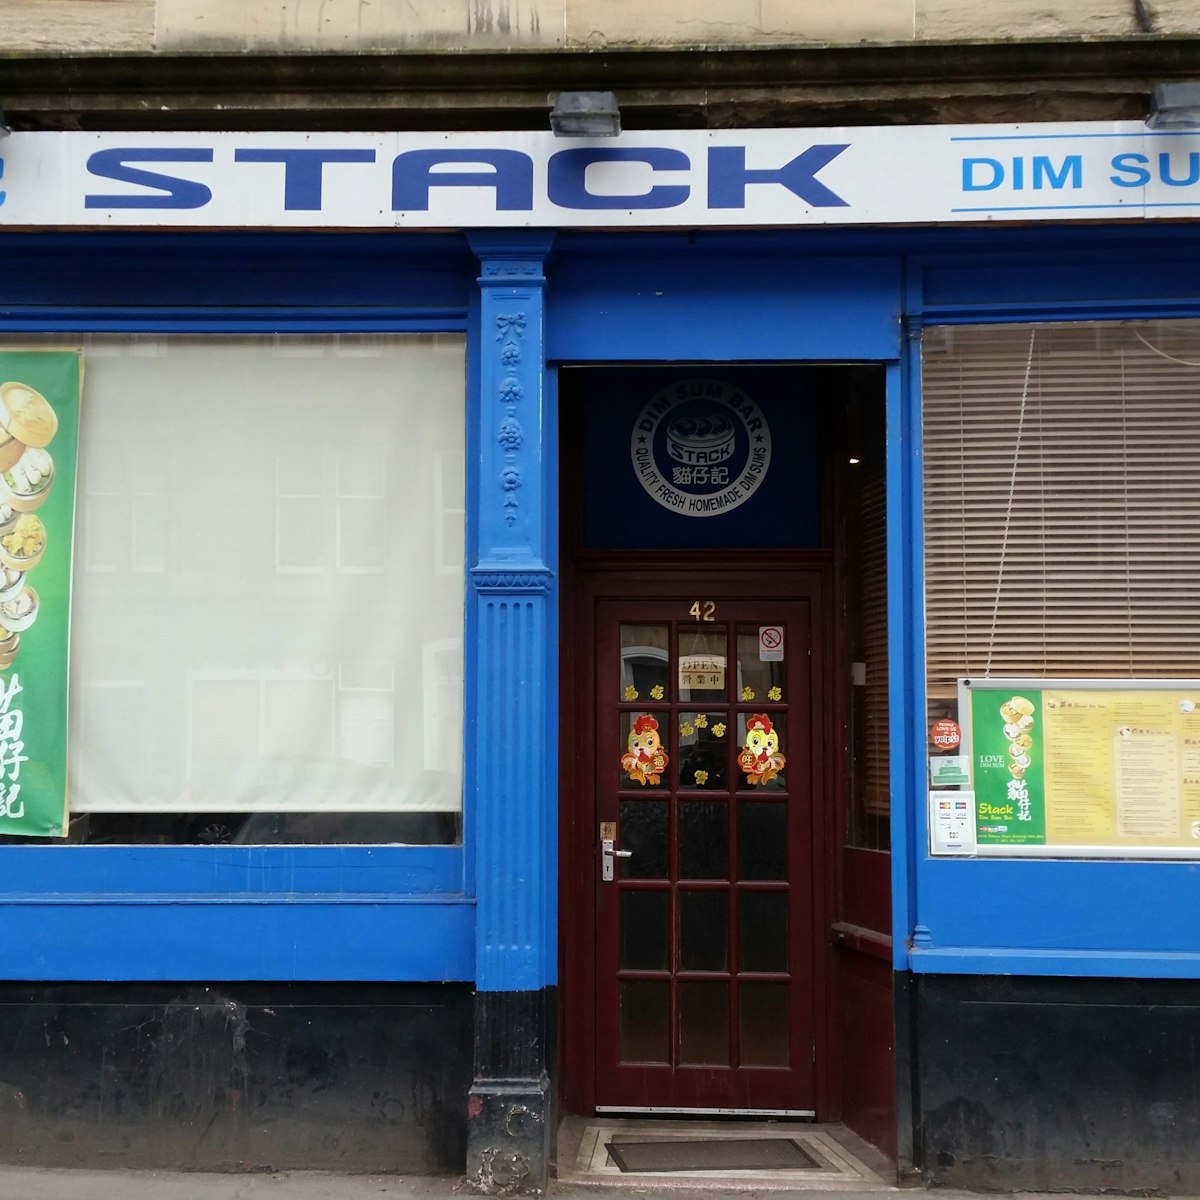 Outside Stack Dim Sum Bar on Dalmeny Street